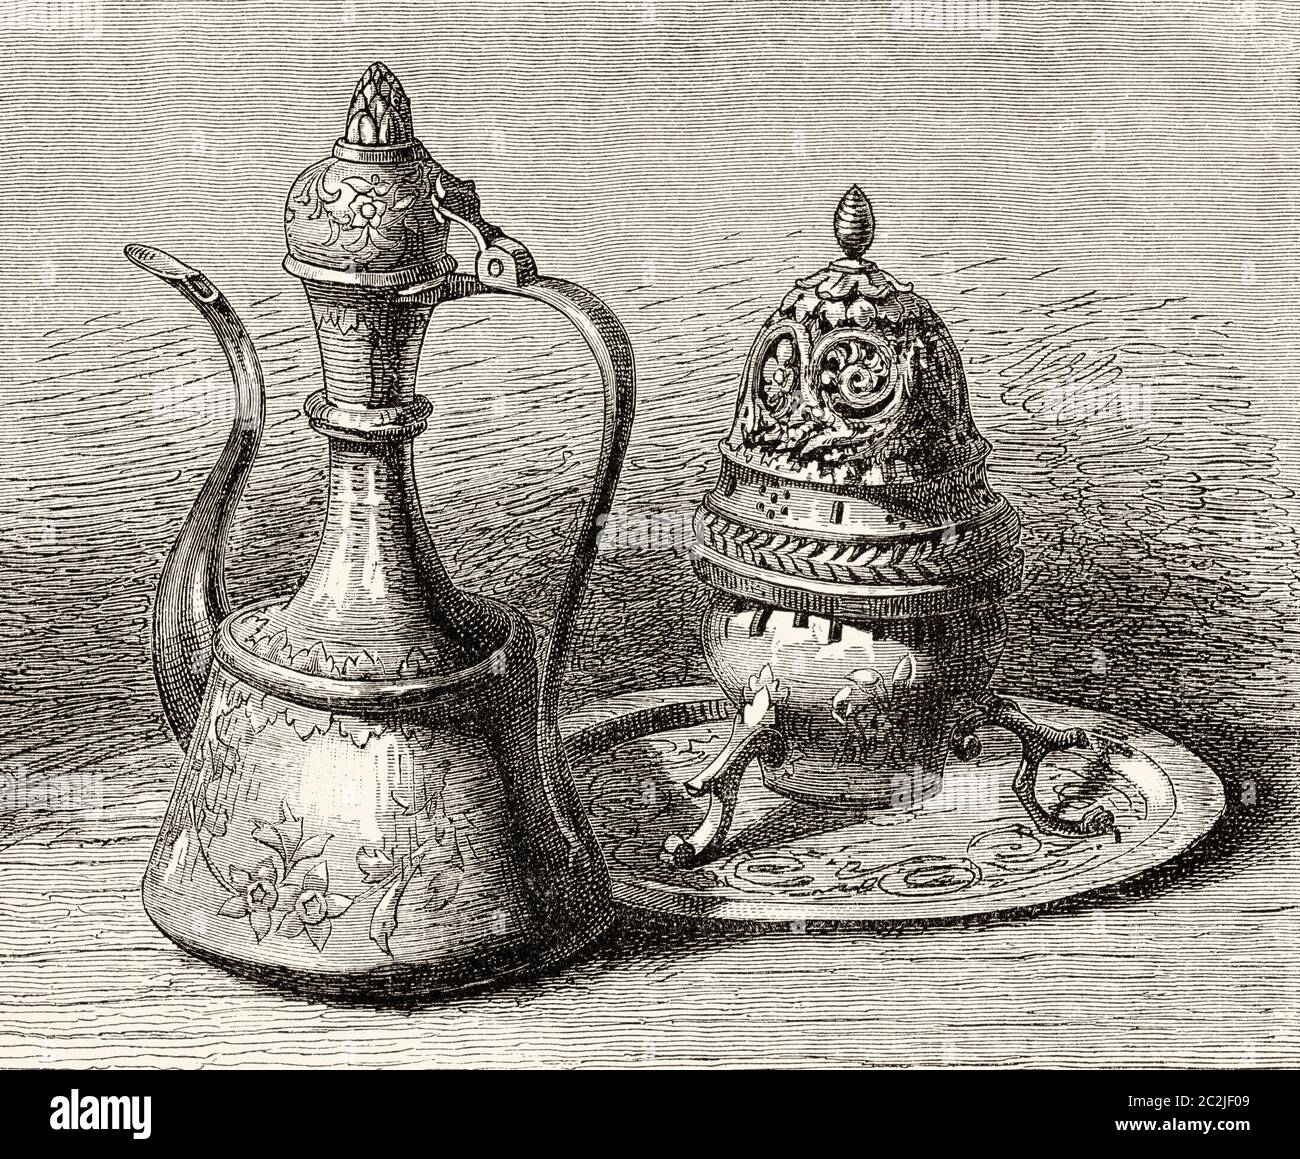 Arab metal containers, Ancient Egypt. Old 19th century engraved illustration, El Mundo Ilustrado 1880 Stock Photo